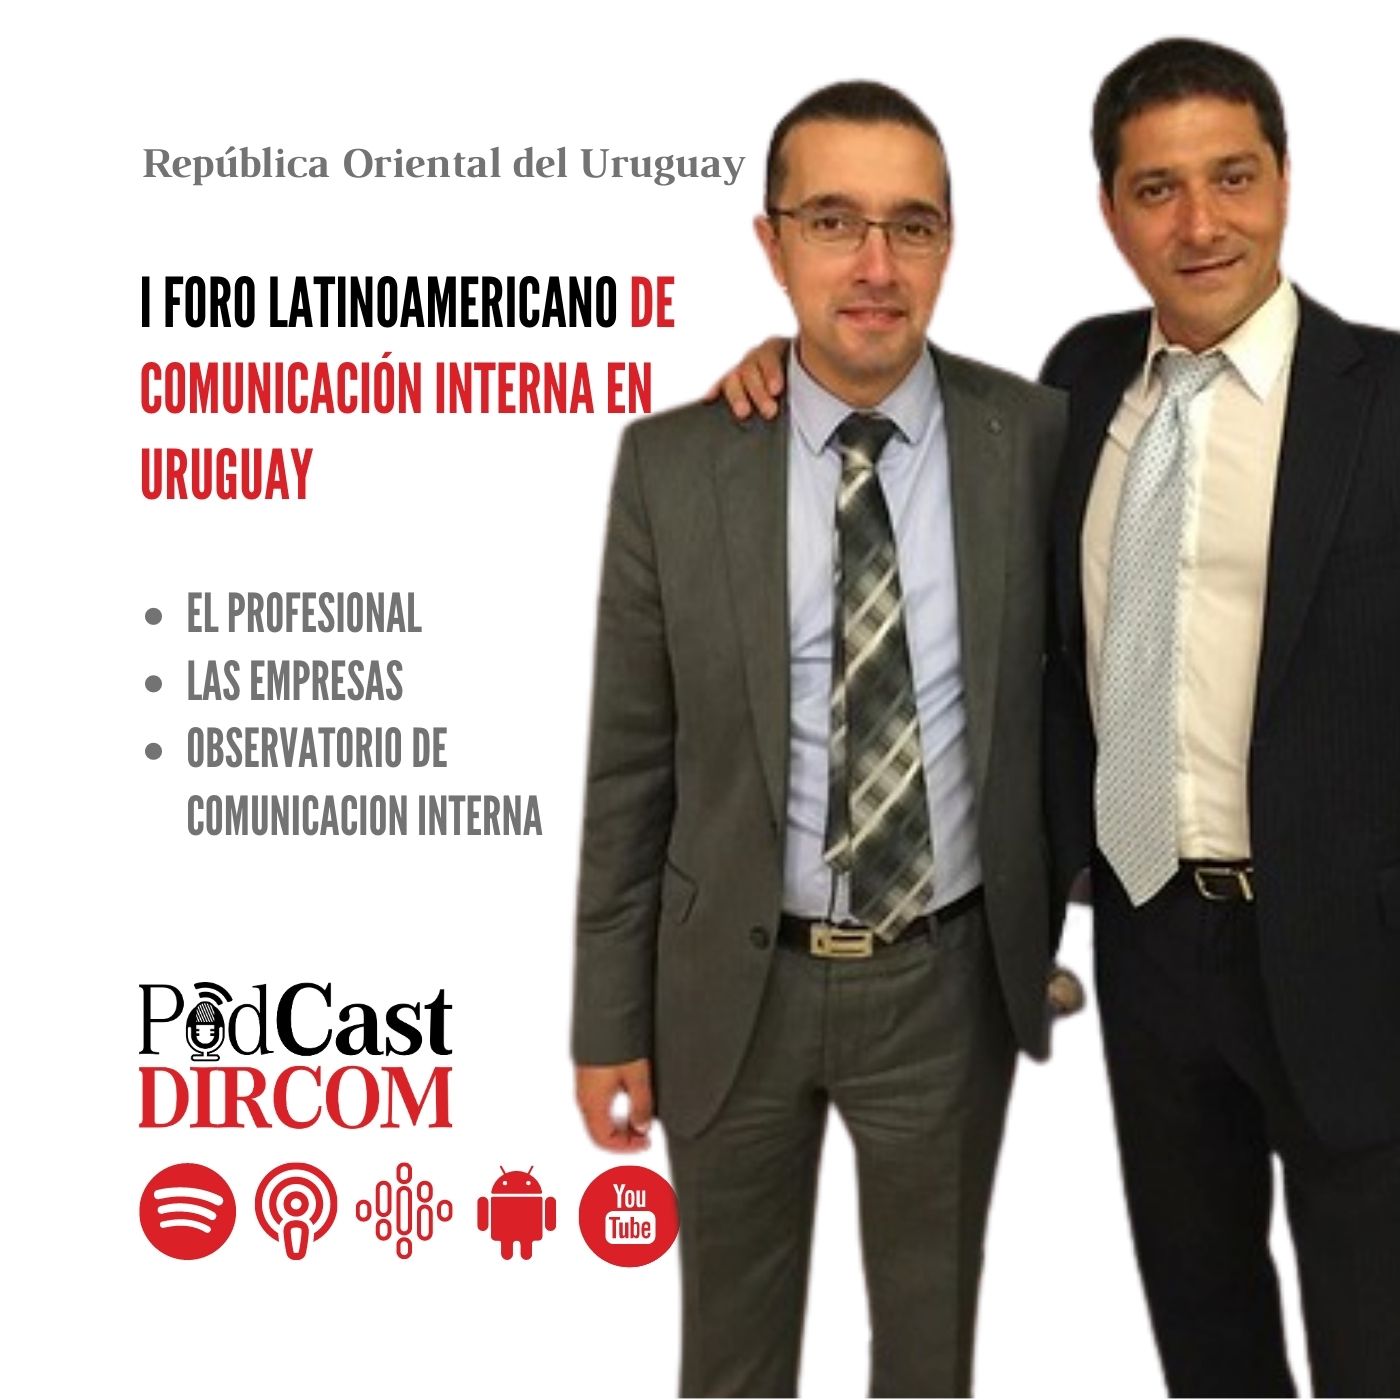 Foro Latinoamericano de Comunicación Interna en Uruguay